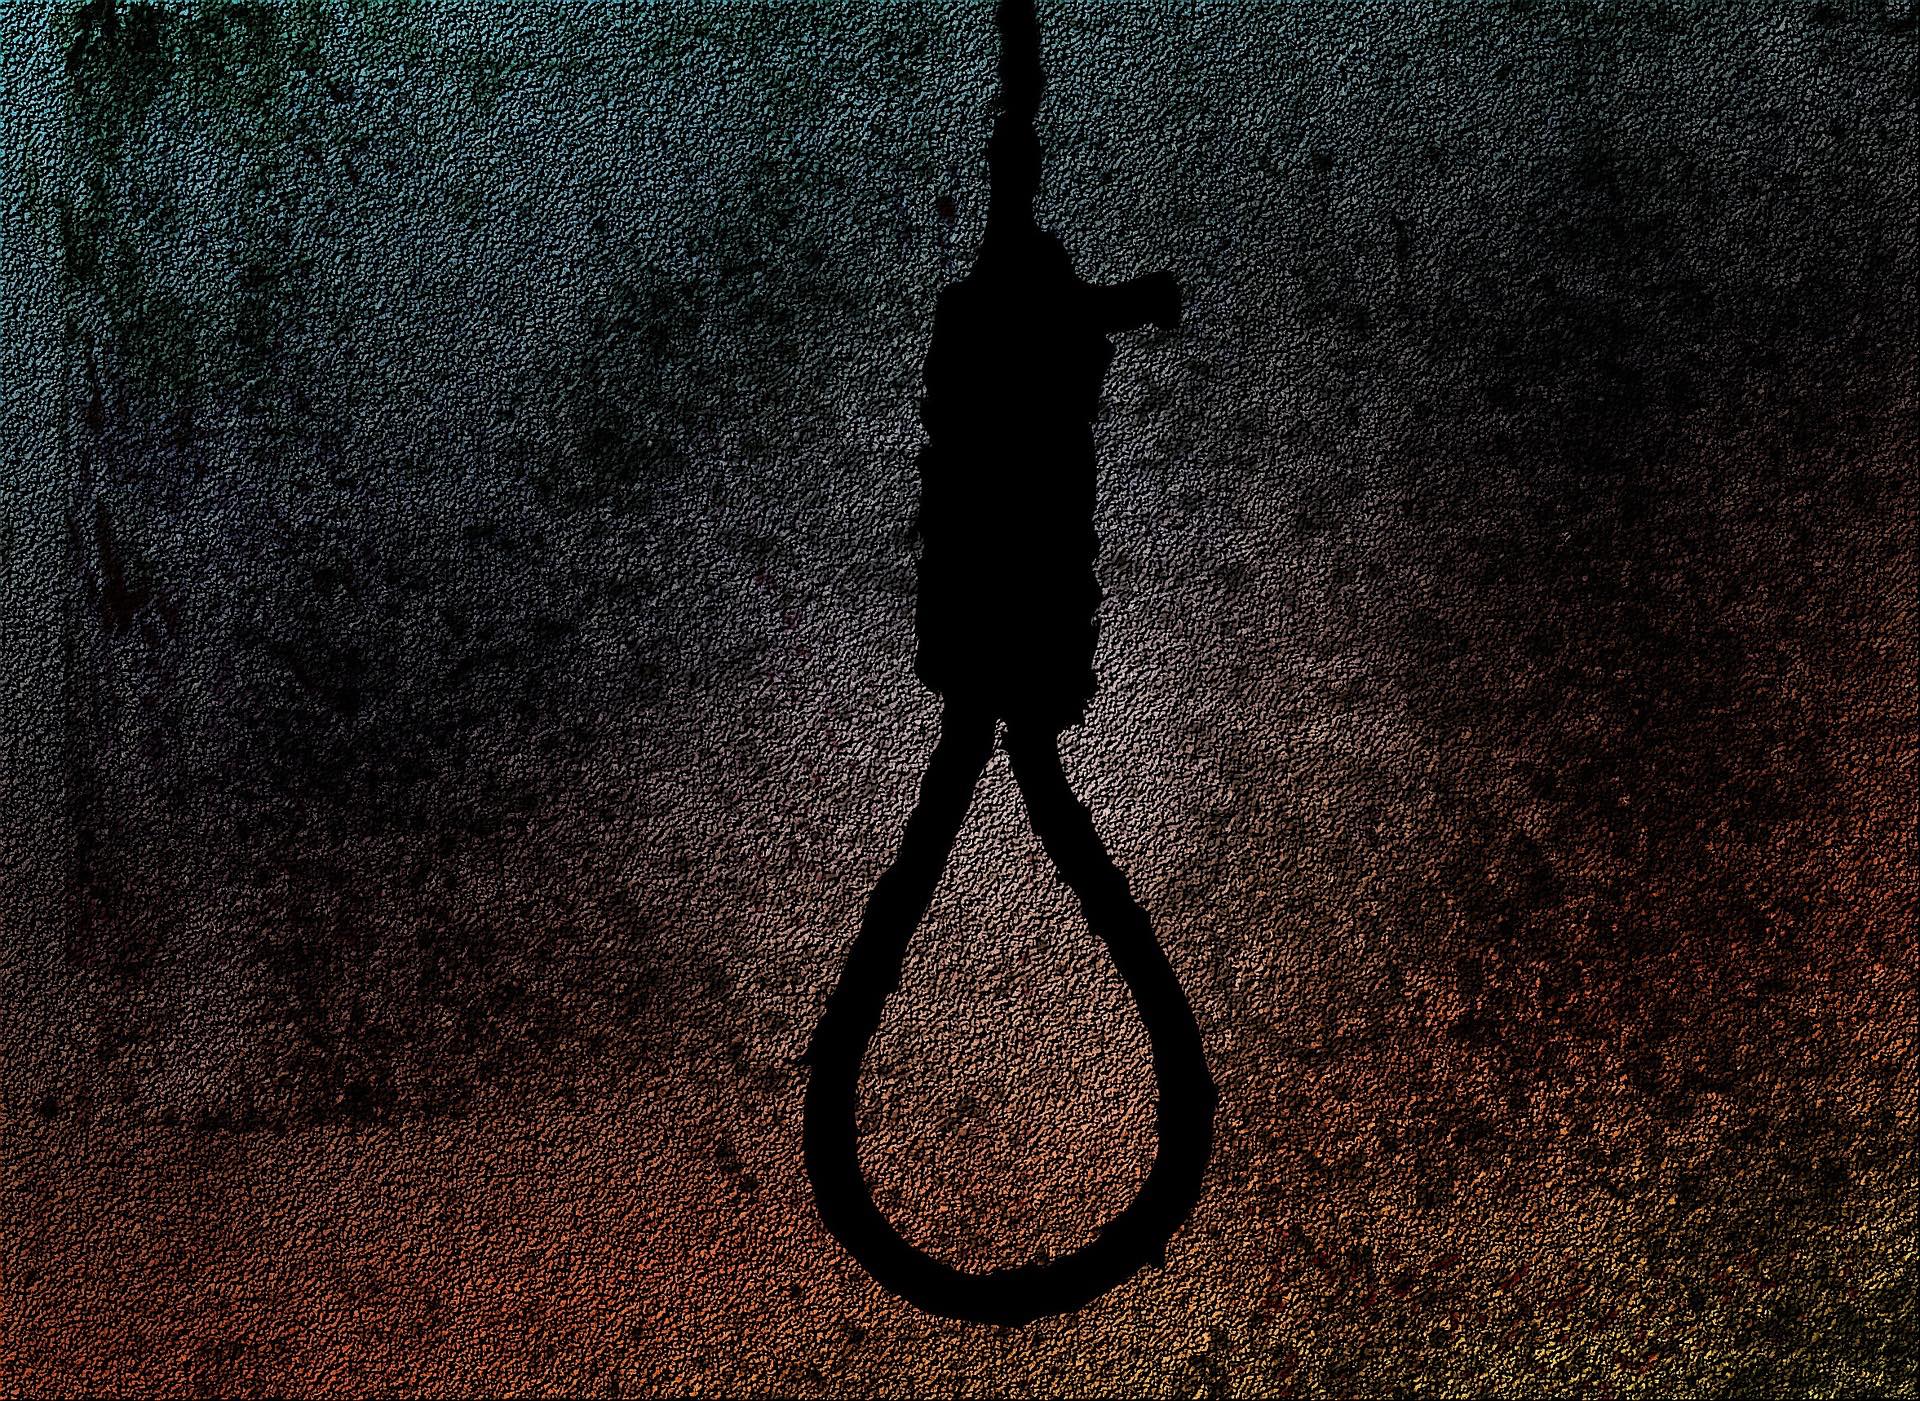 Suicide Methods: Russian Roulette, Hanging, Defenestration